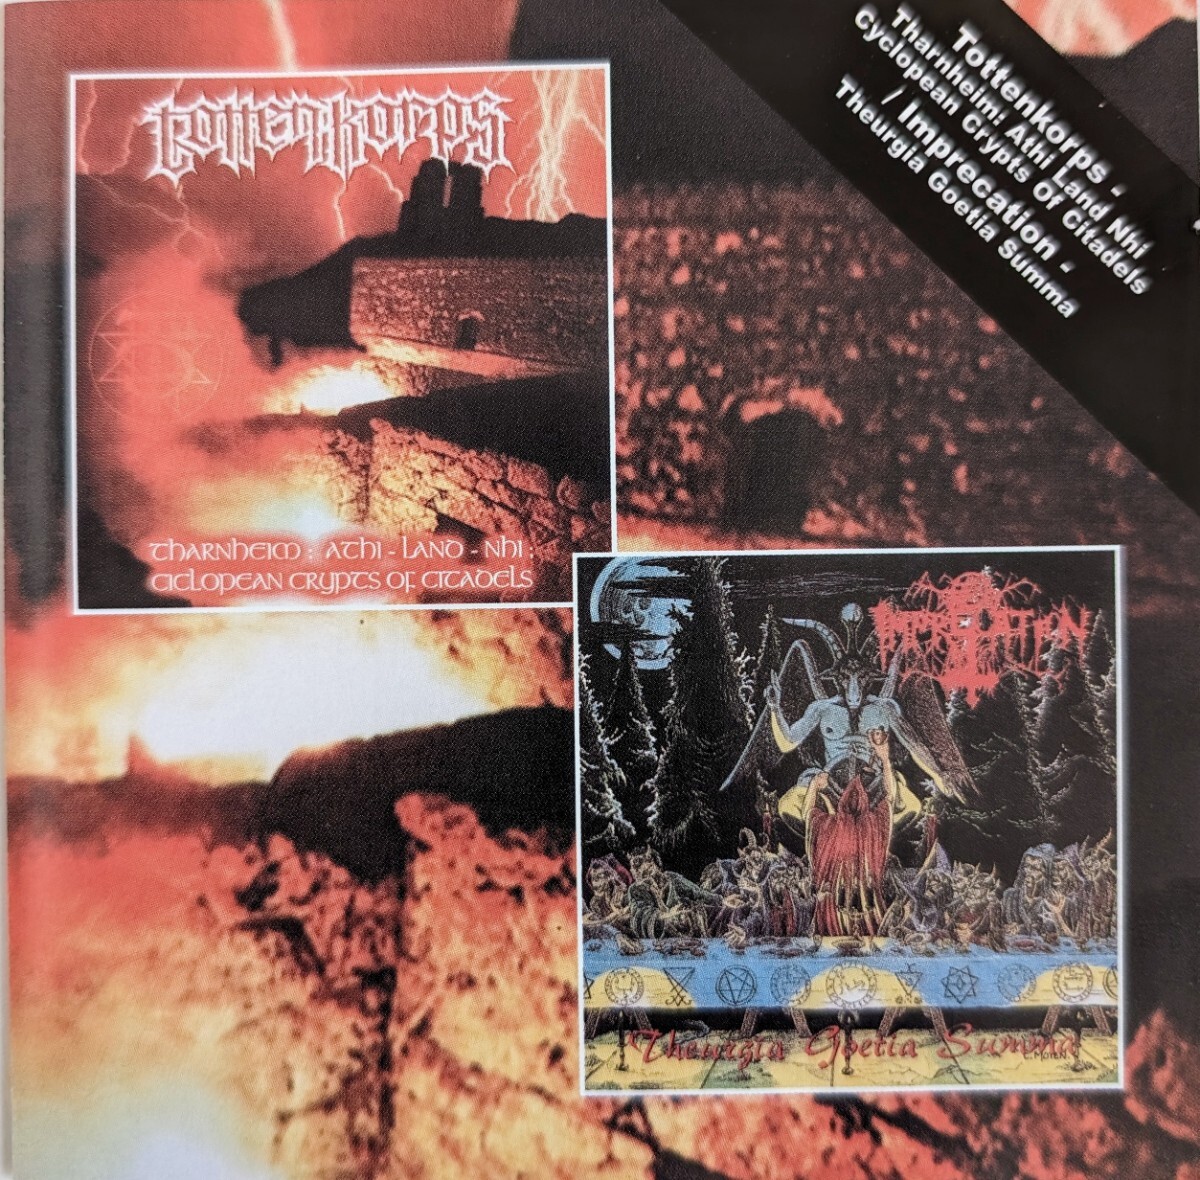 Totten Korps / Imprecation Brutal Black Death Heavy Metal ブルータル ブラック デス ヘヴィメタル 輸入盤2CDの画像1